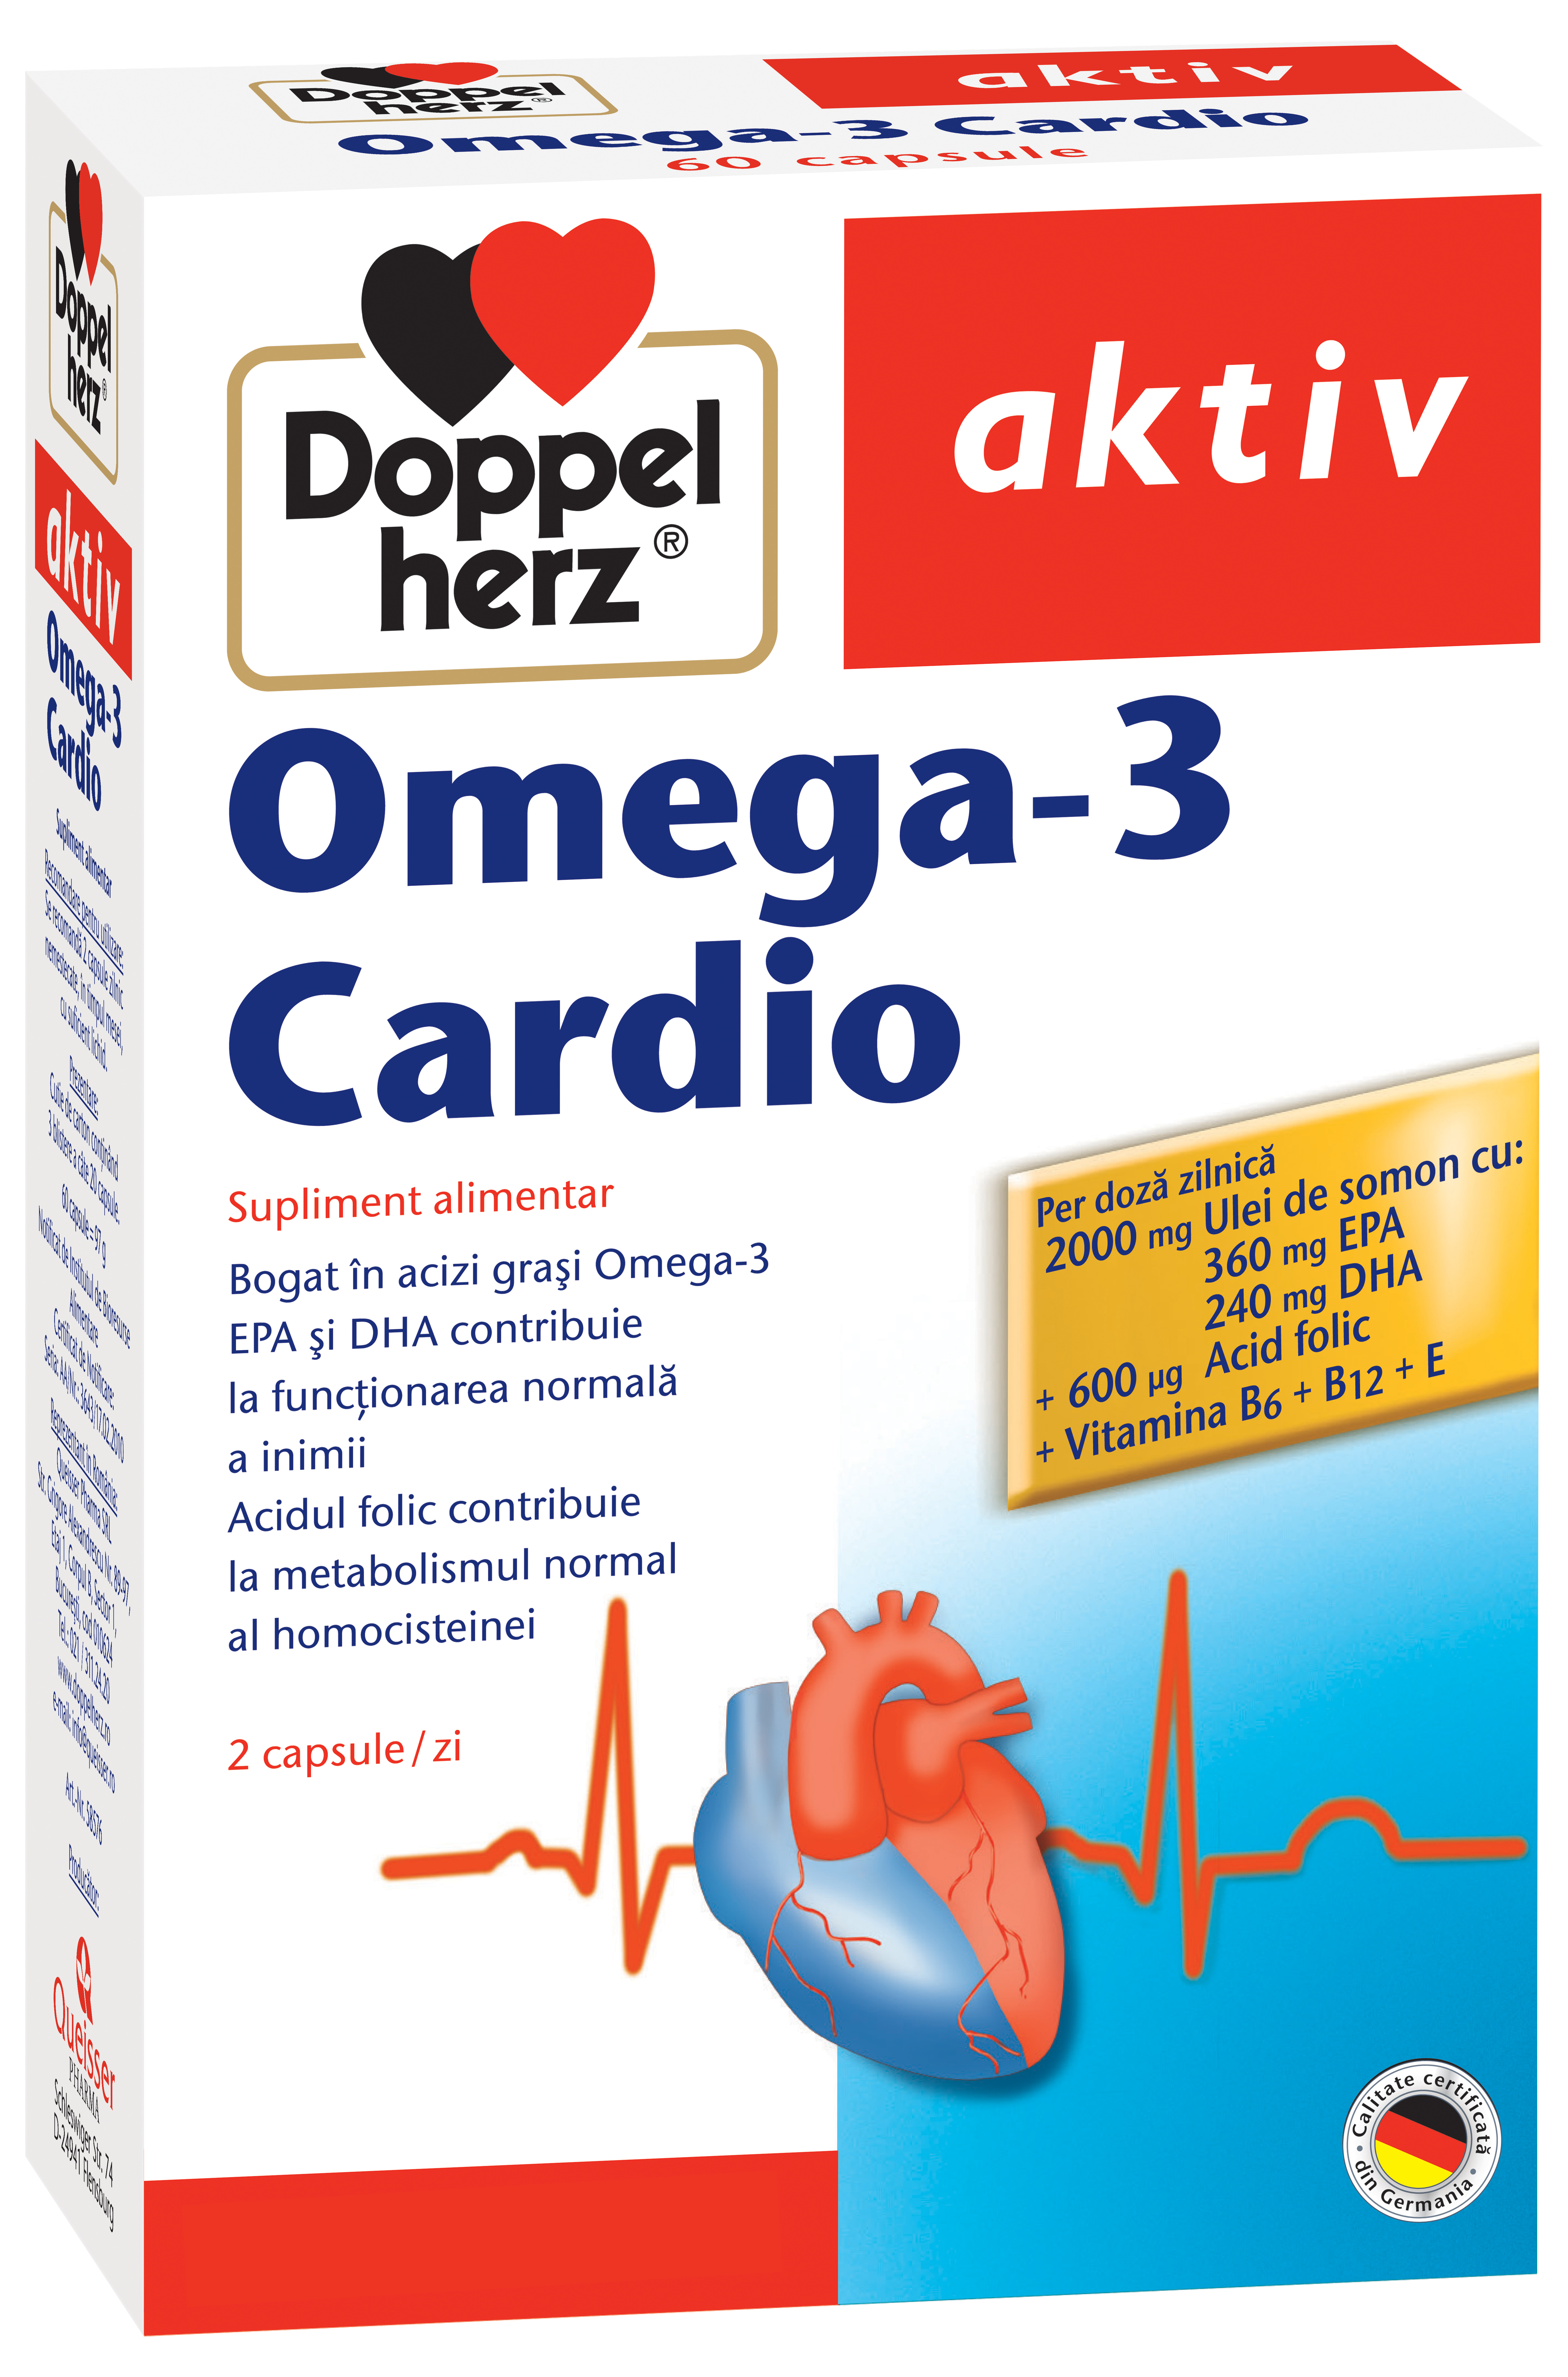 Anticolesterol - Doppelherz Aktiv Omega 3 Cardio, 60 capsule, sinapis.ro